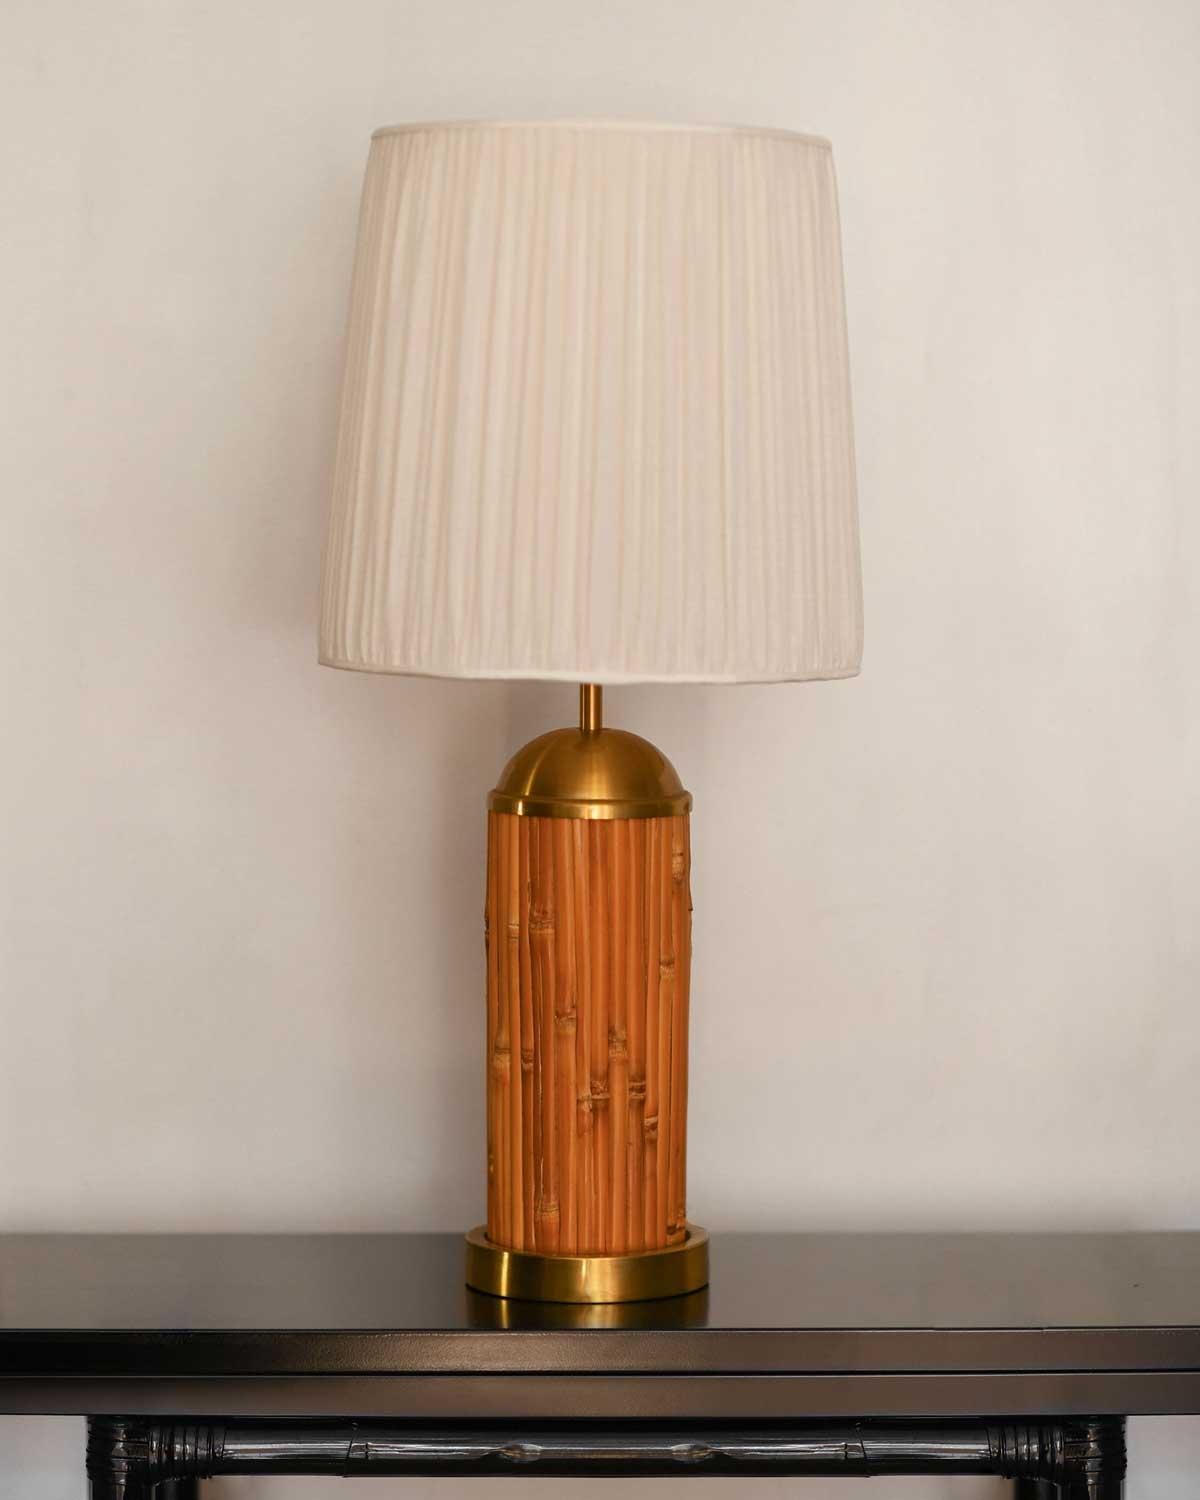 70s lampshade